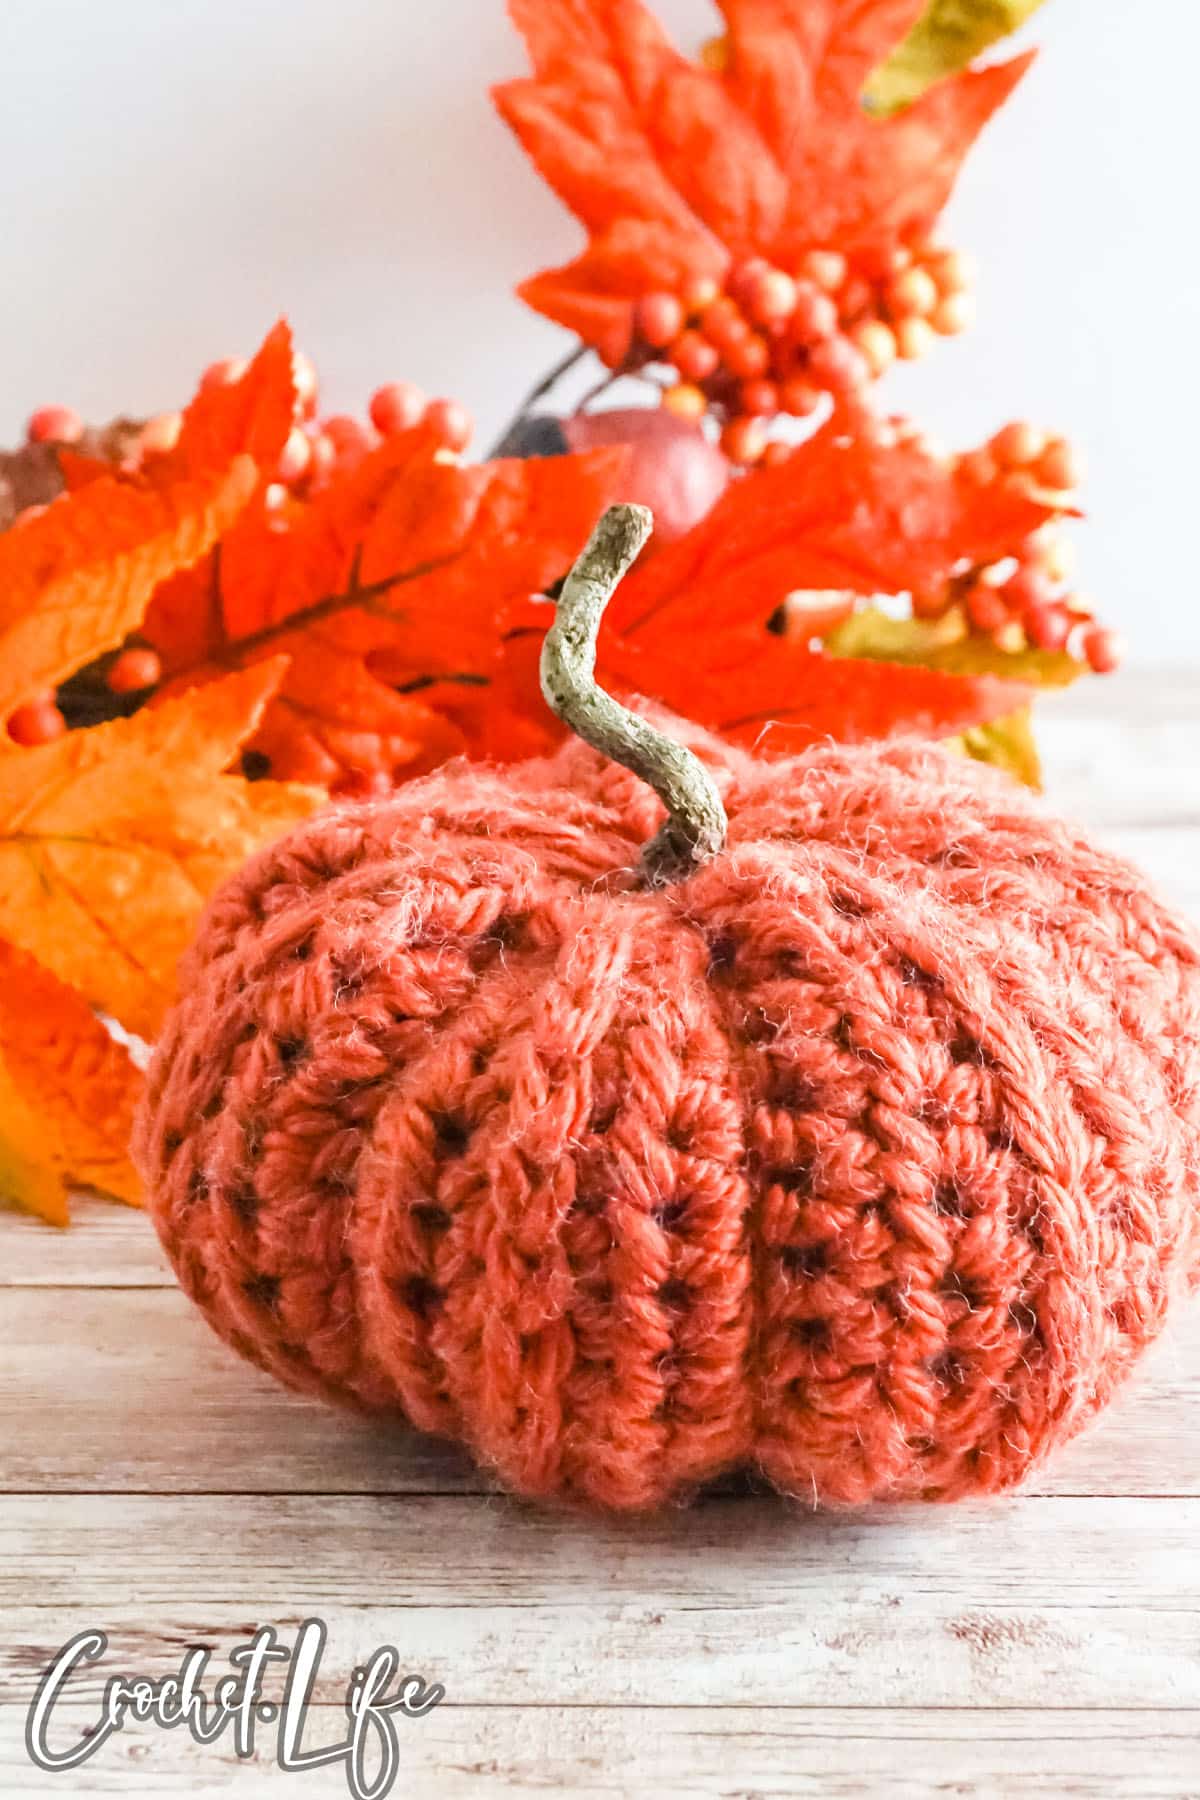 easy crocheted pumpkin pattern for fall